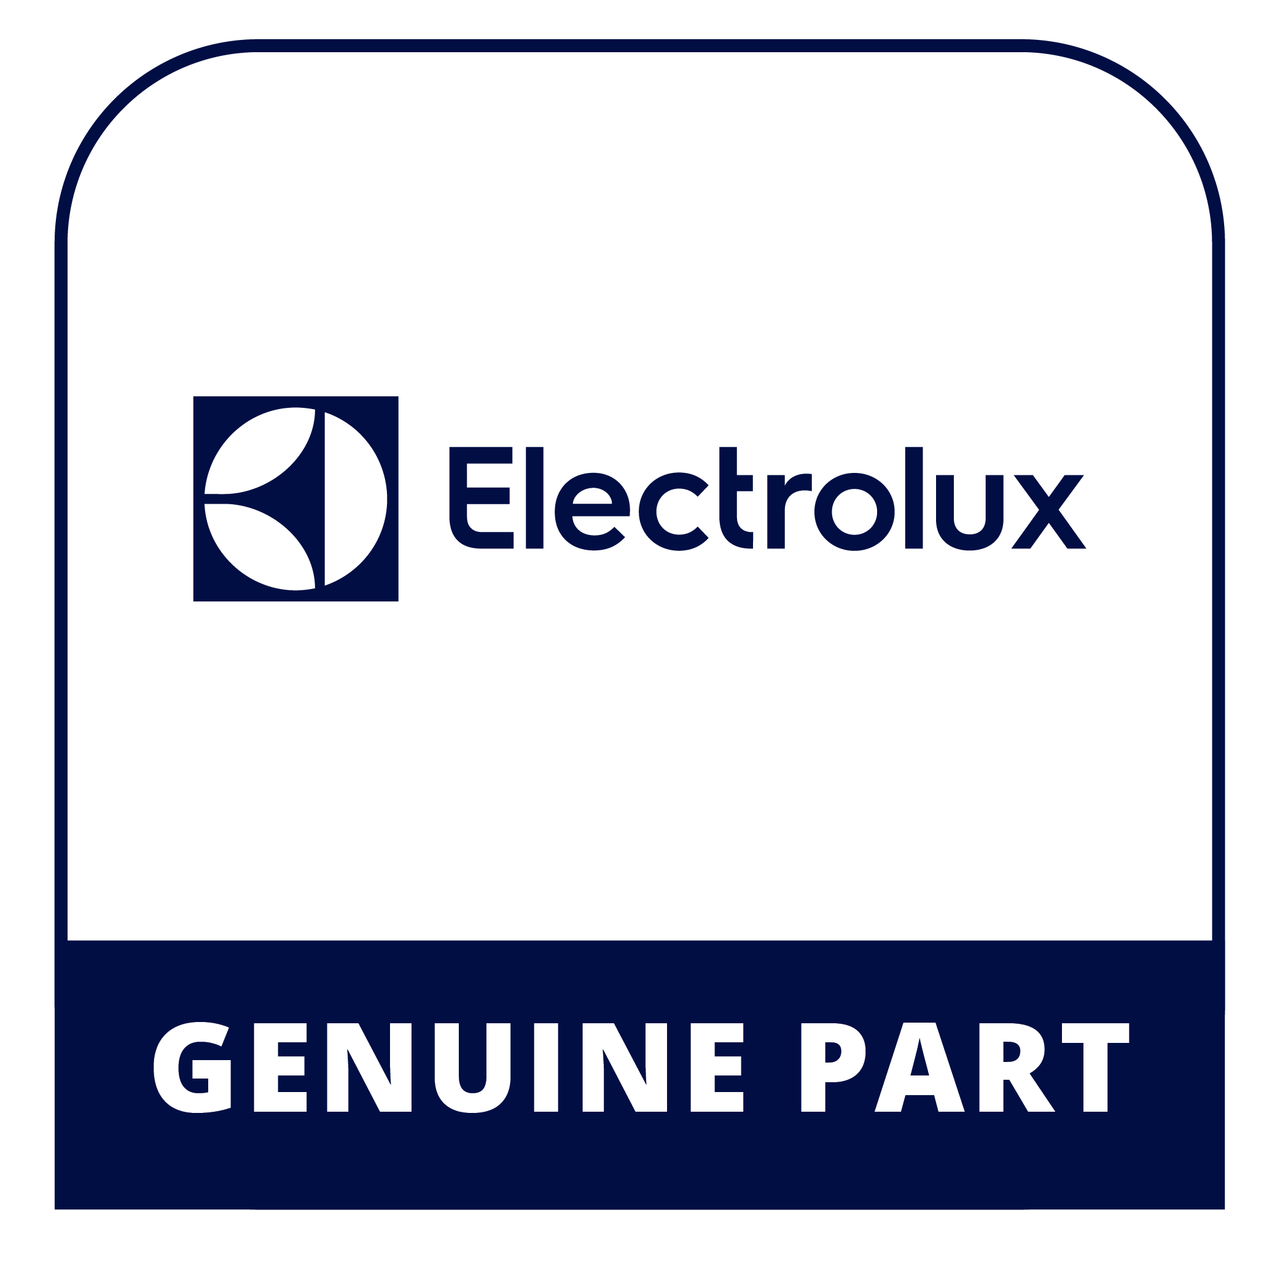 Frigidaire - Electrolux 5304498810 Gasket - Genuine Electrolux Part